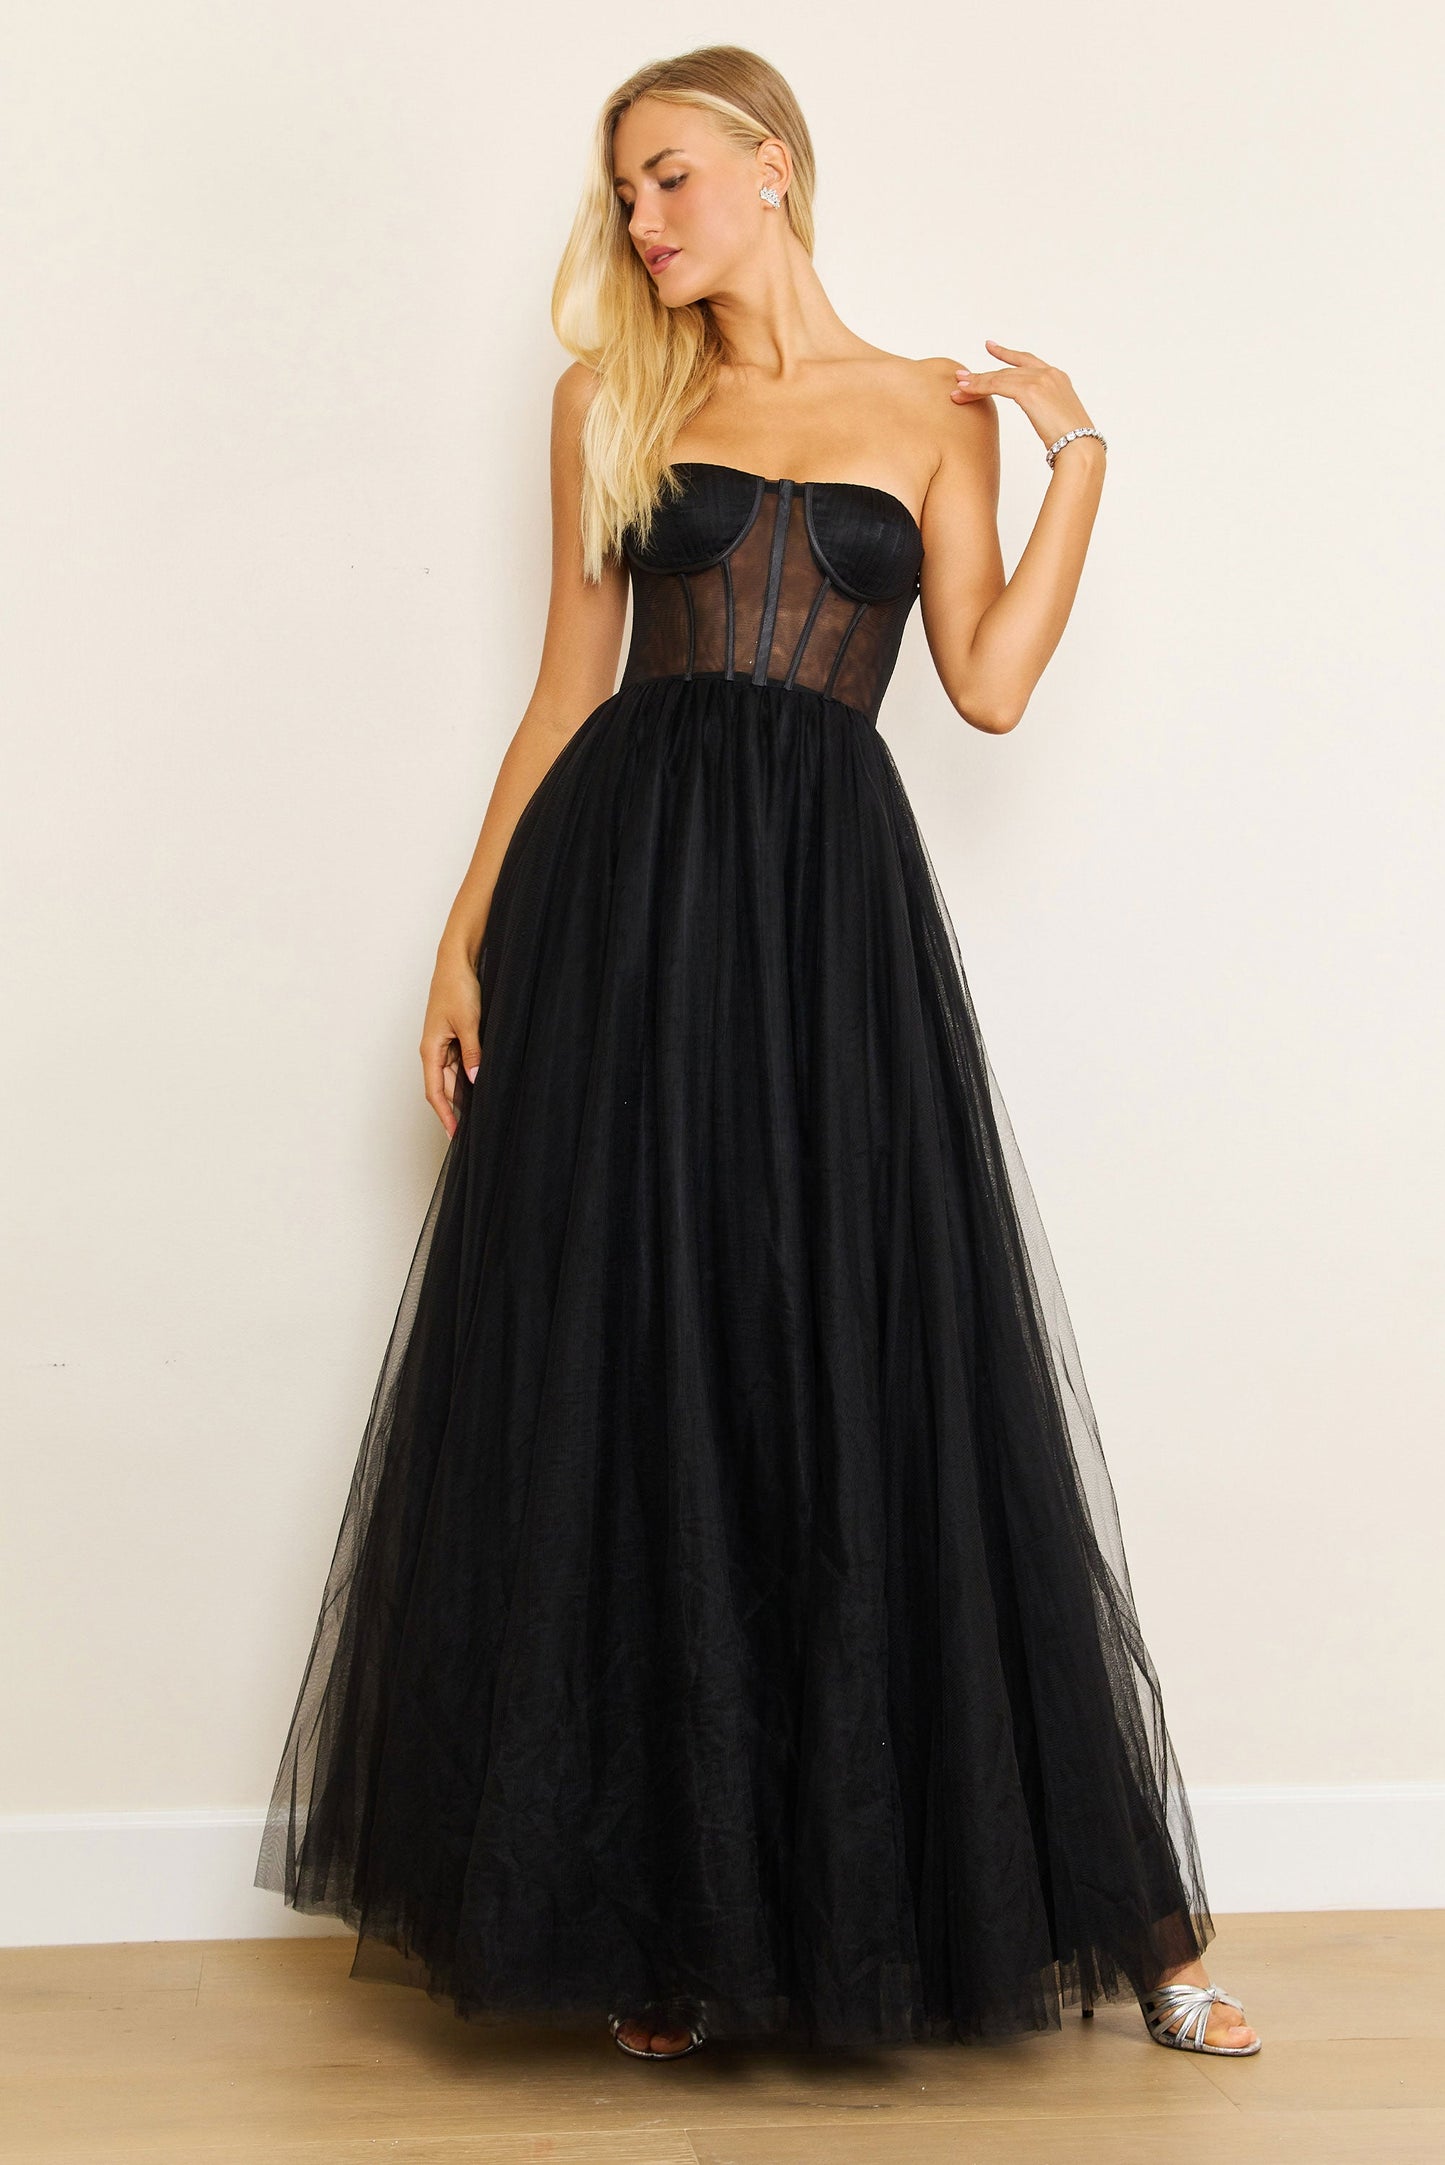 Black Wedding Dresses Long Strapless Corset Black Wedding Dress Black